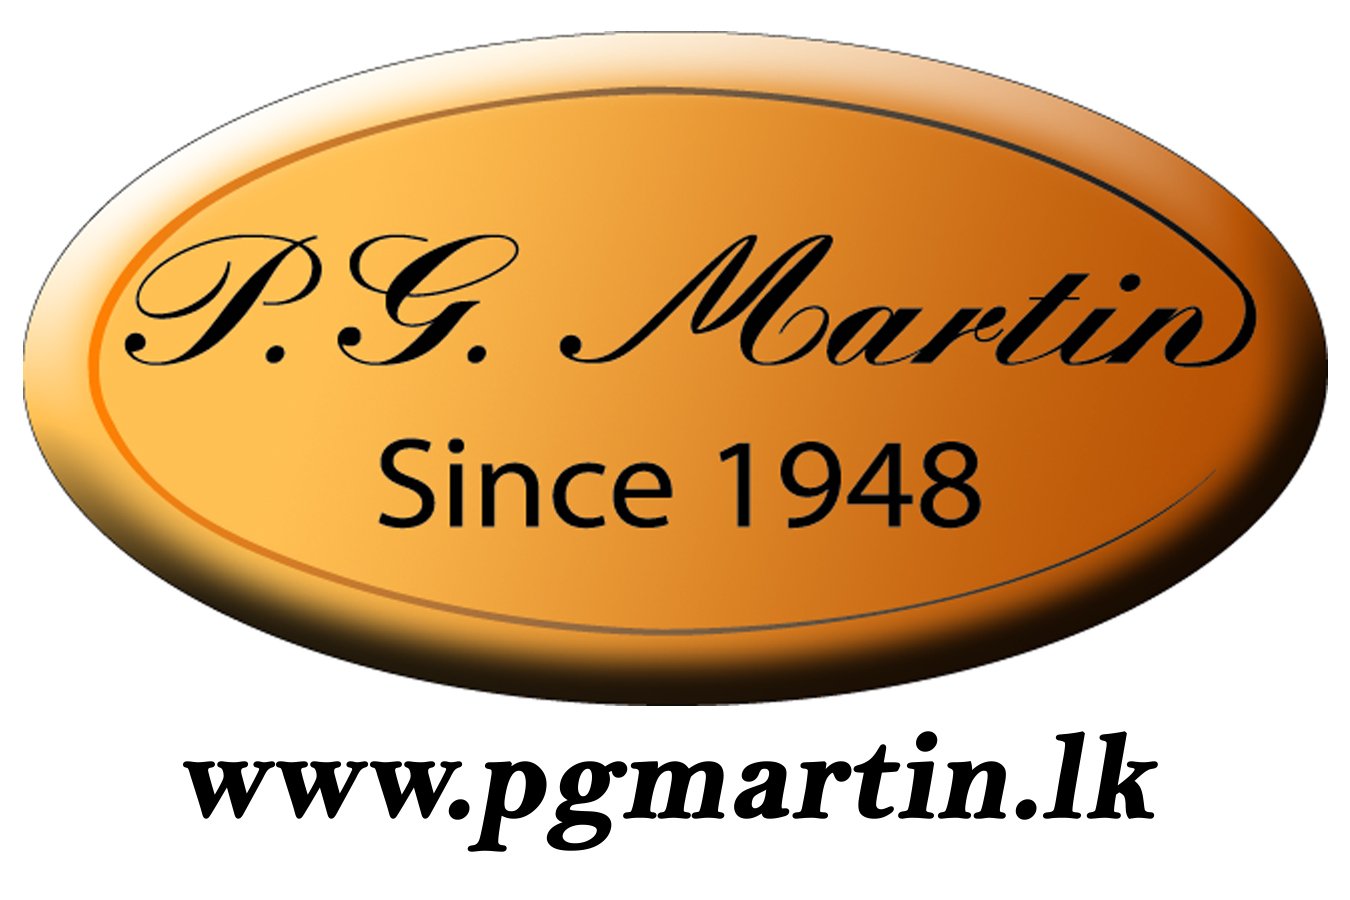 P.G MARTIN online sale listings at Kapruka